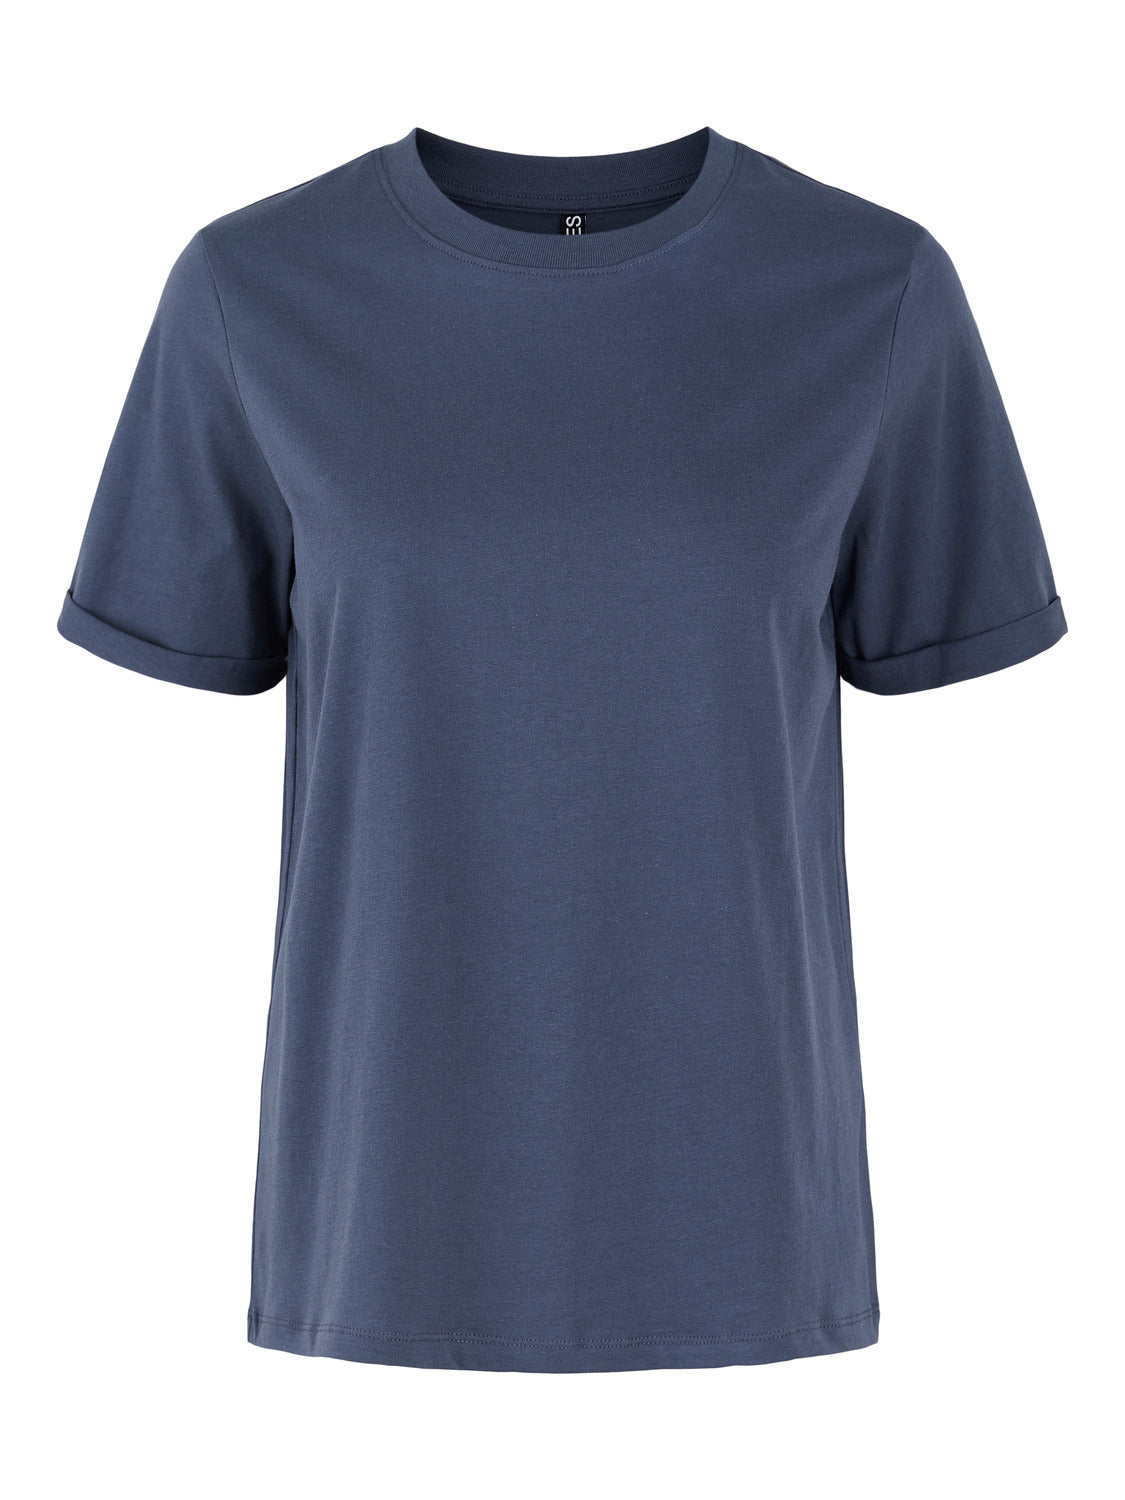 PCRIA T-shirt - ombre blue